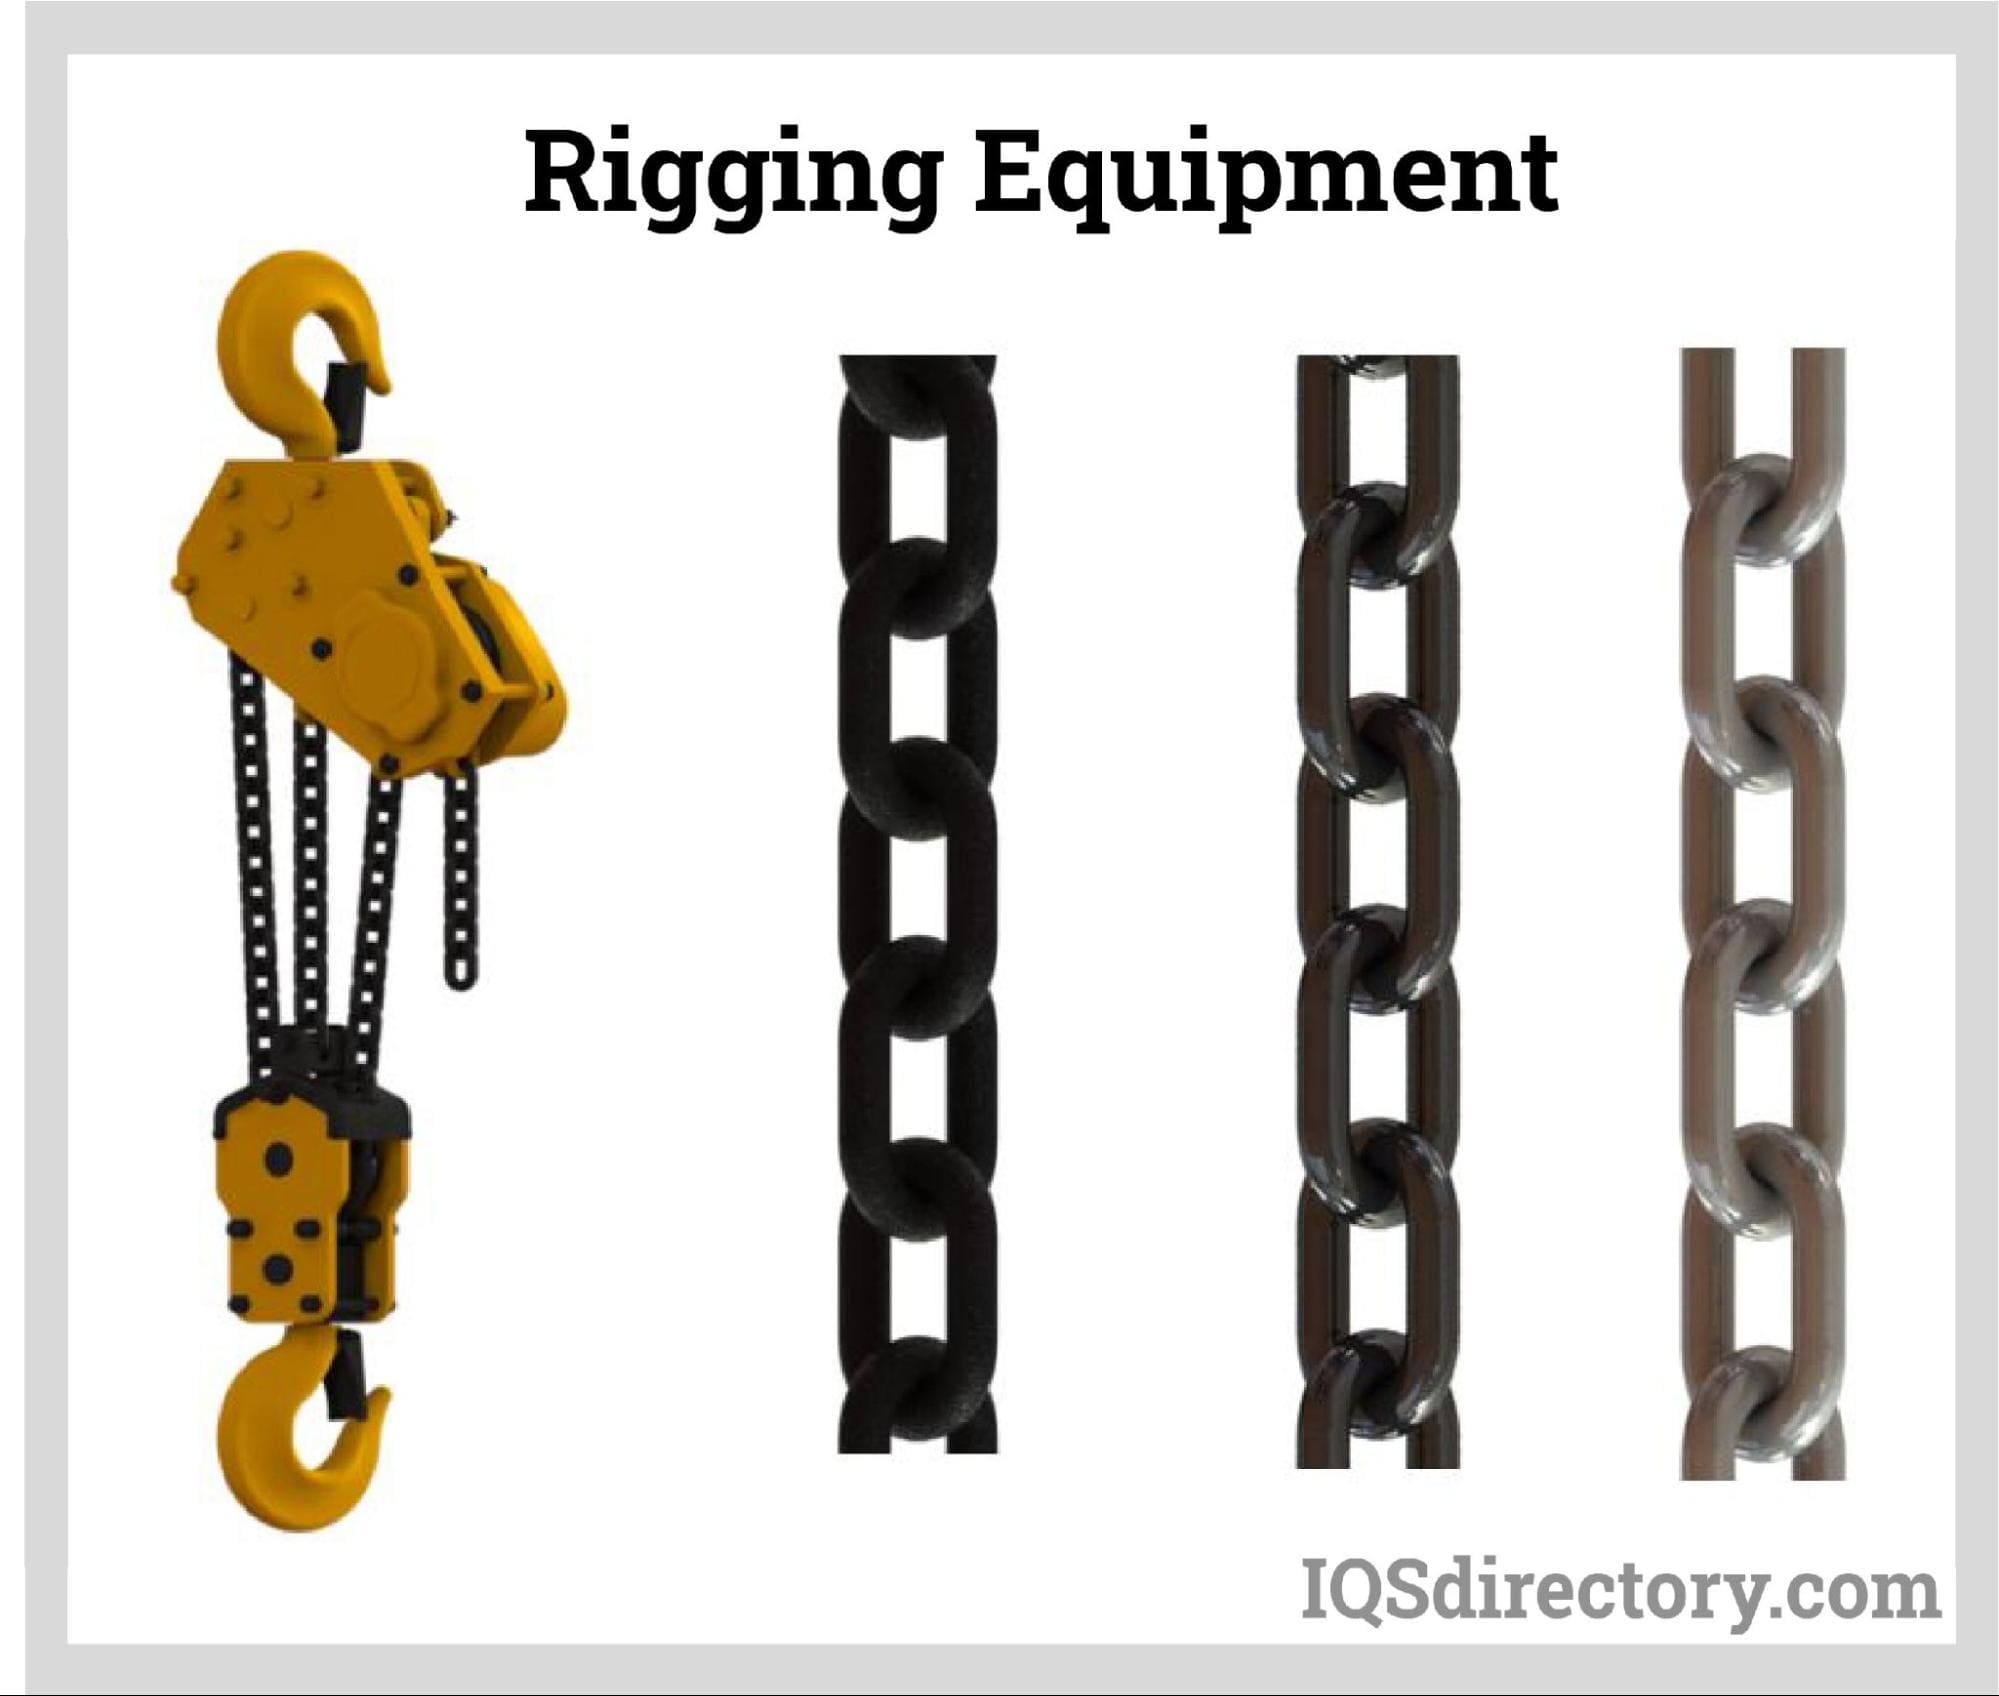 Rigging Equipment, Lifting Equipment